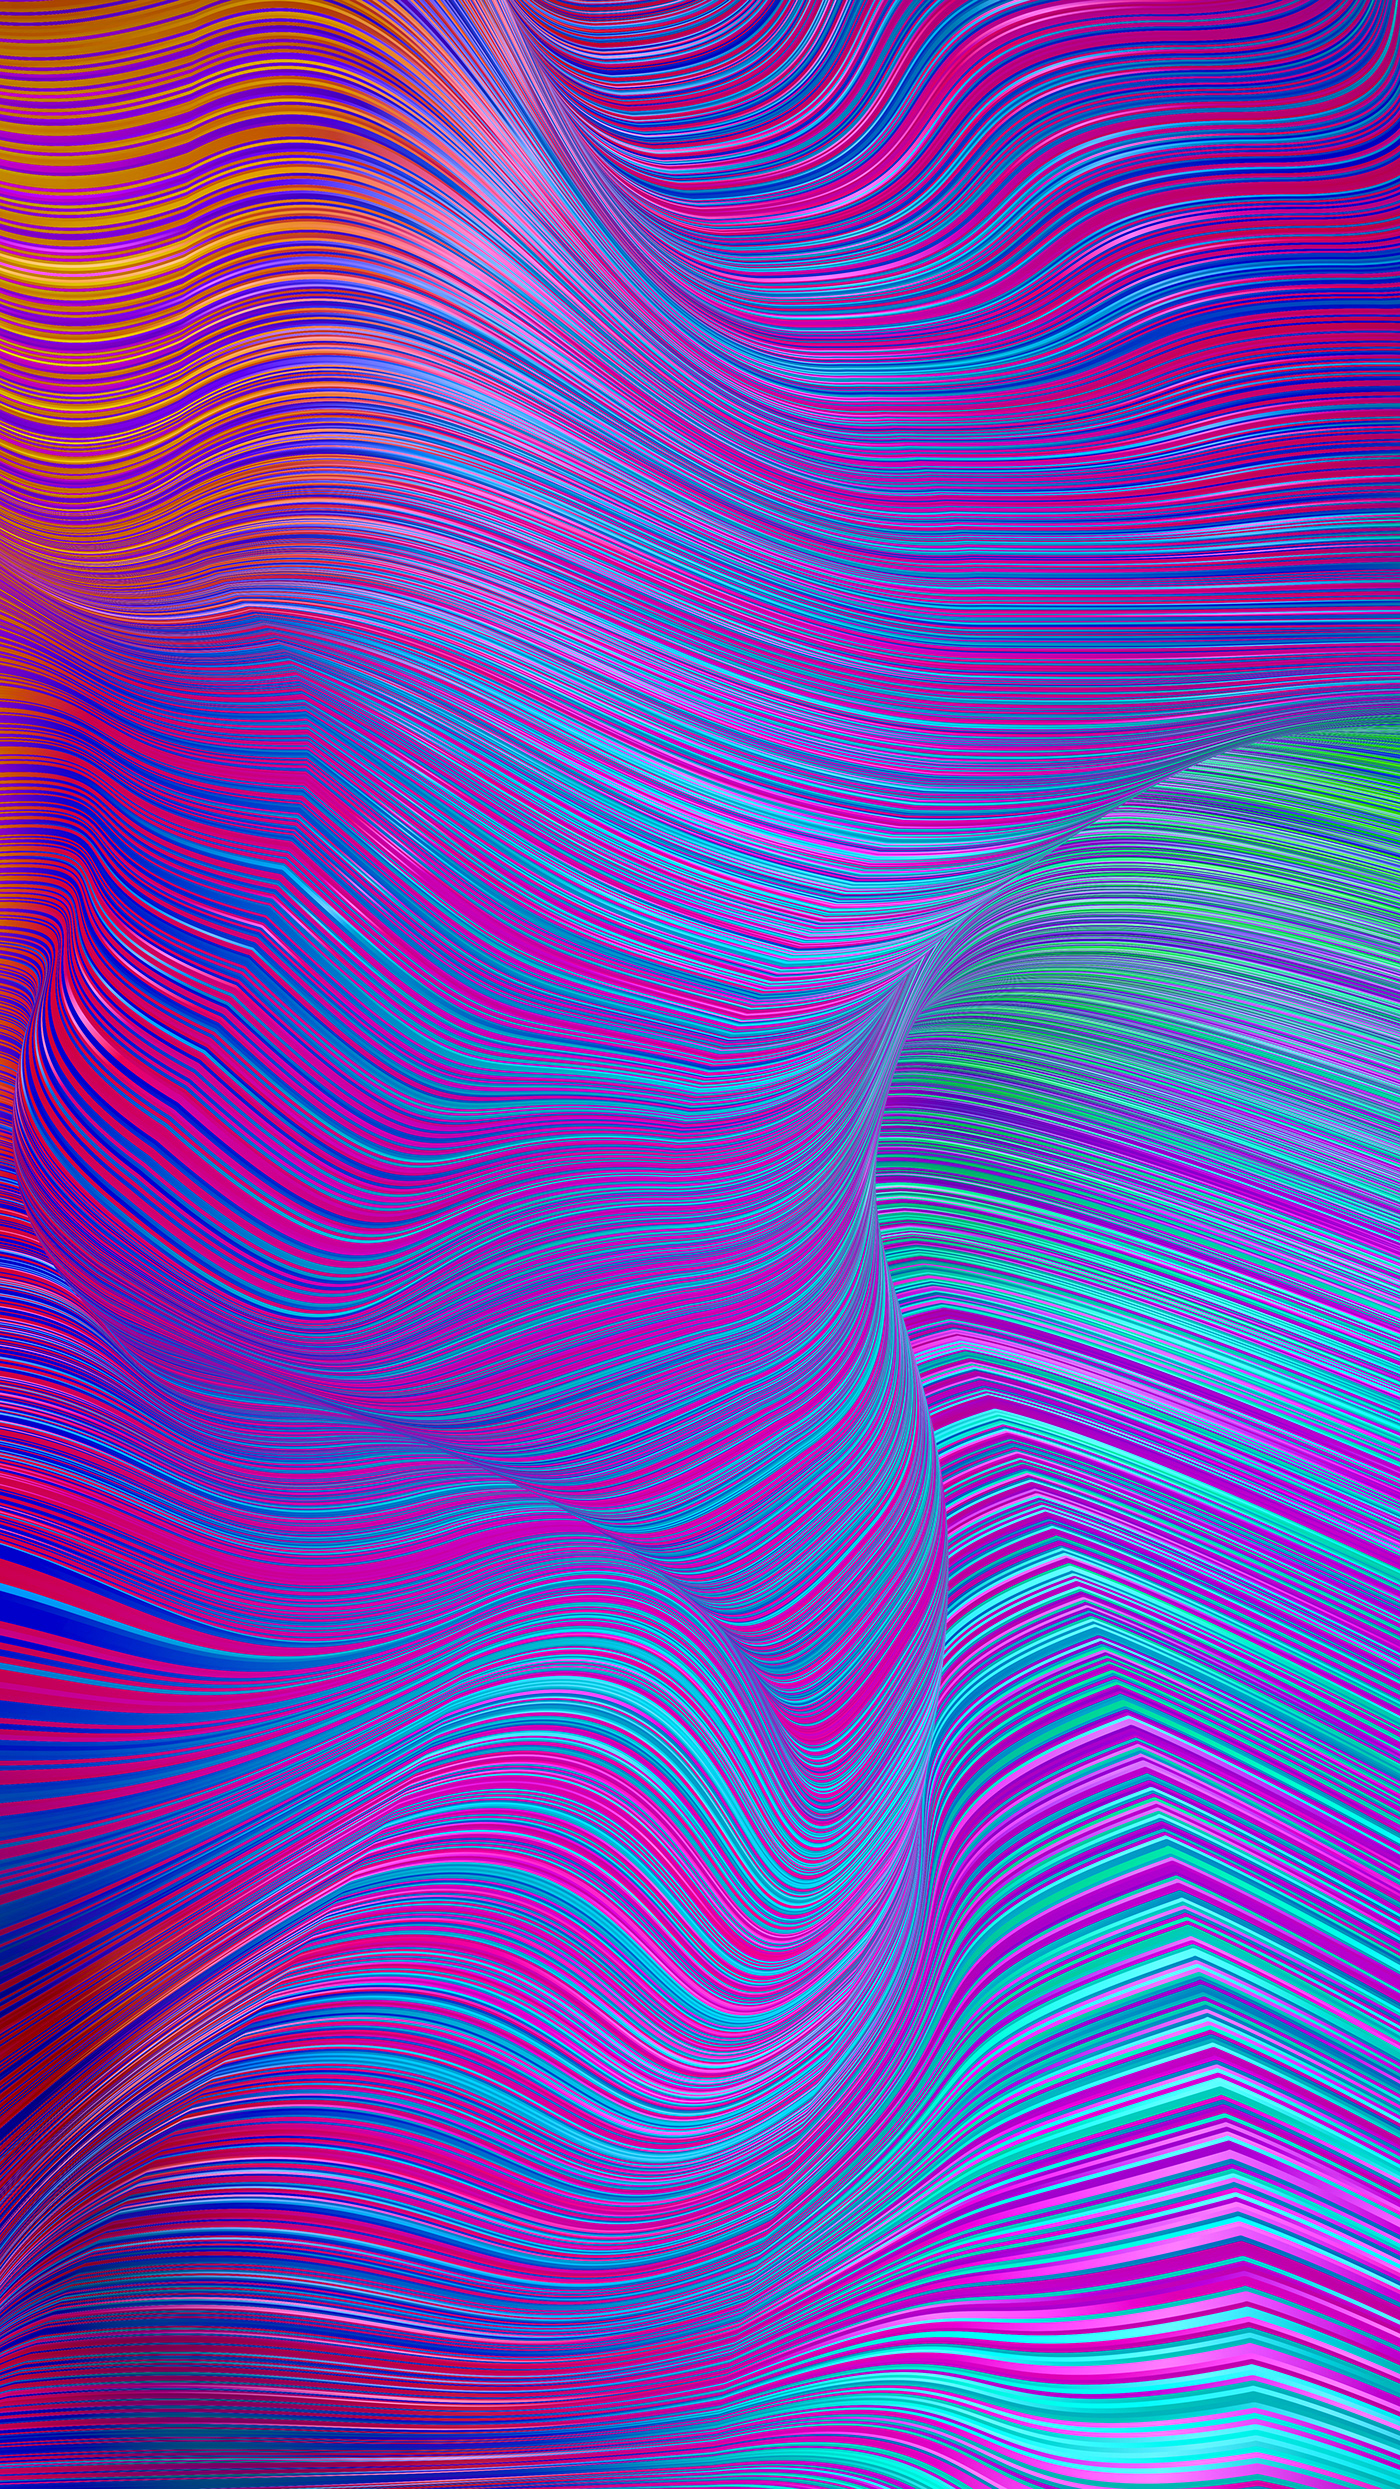 abtsract wallpaper mobile background pattern vector adobe illustrator digital illustration waves lines